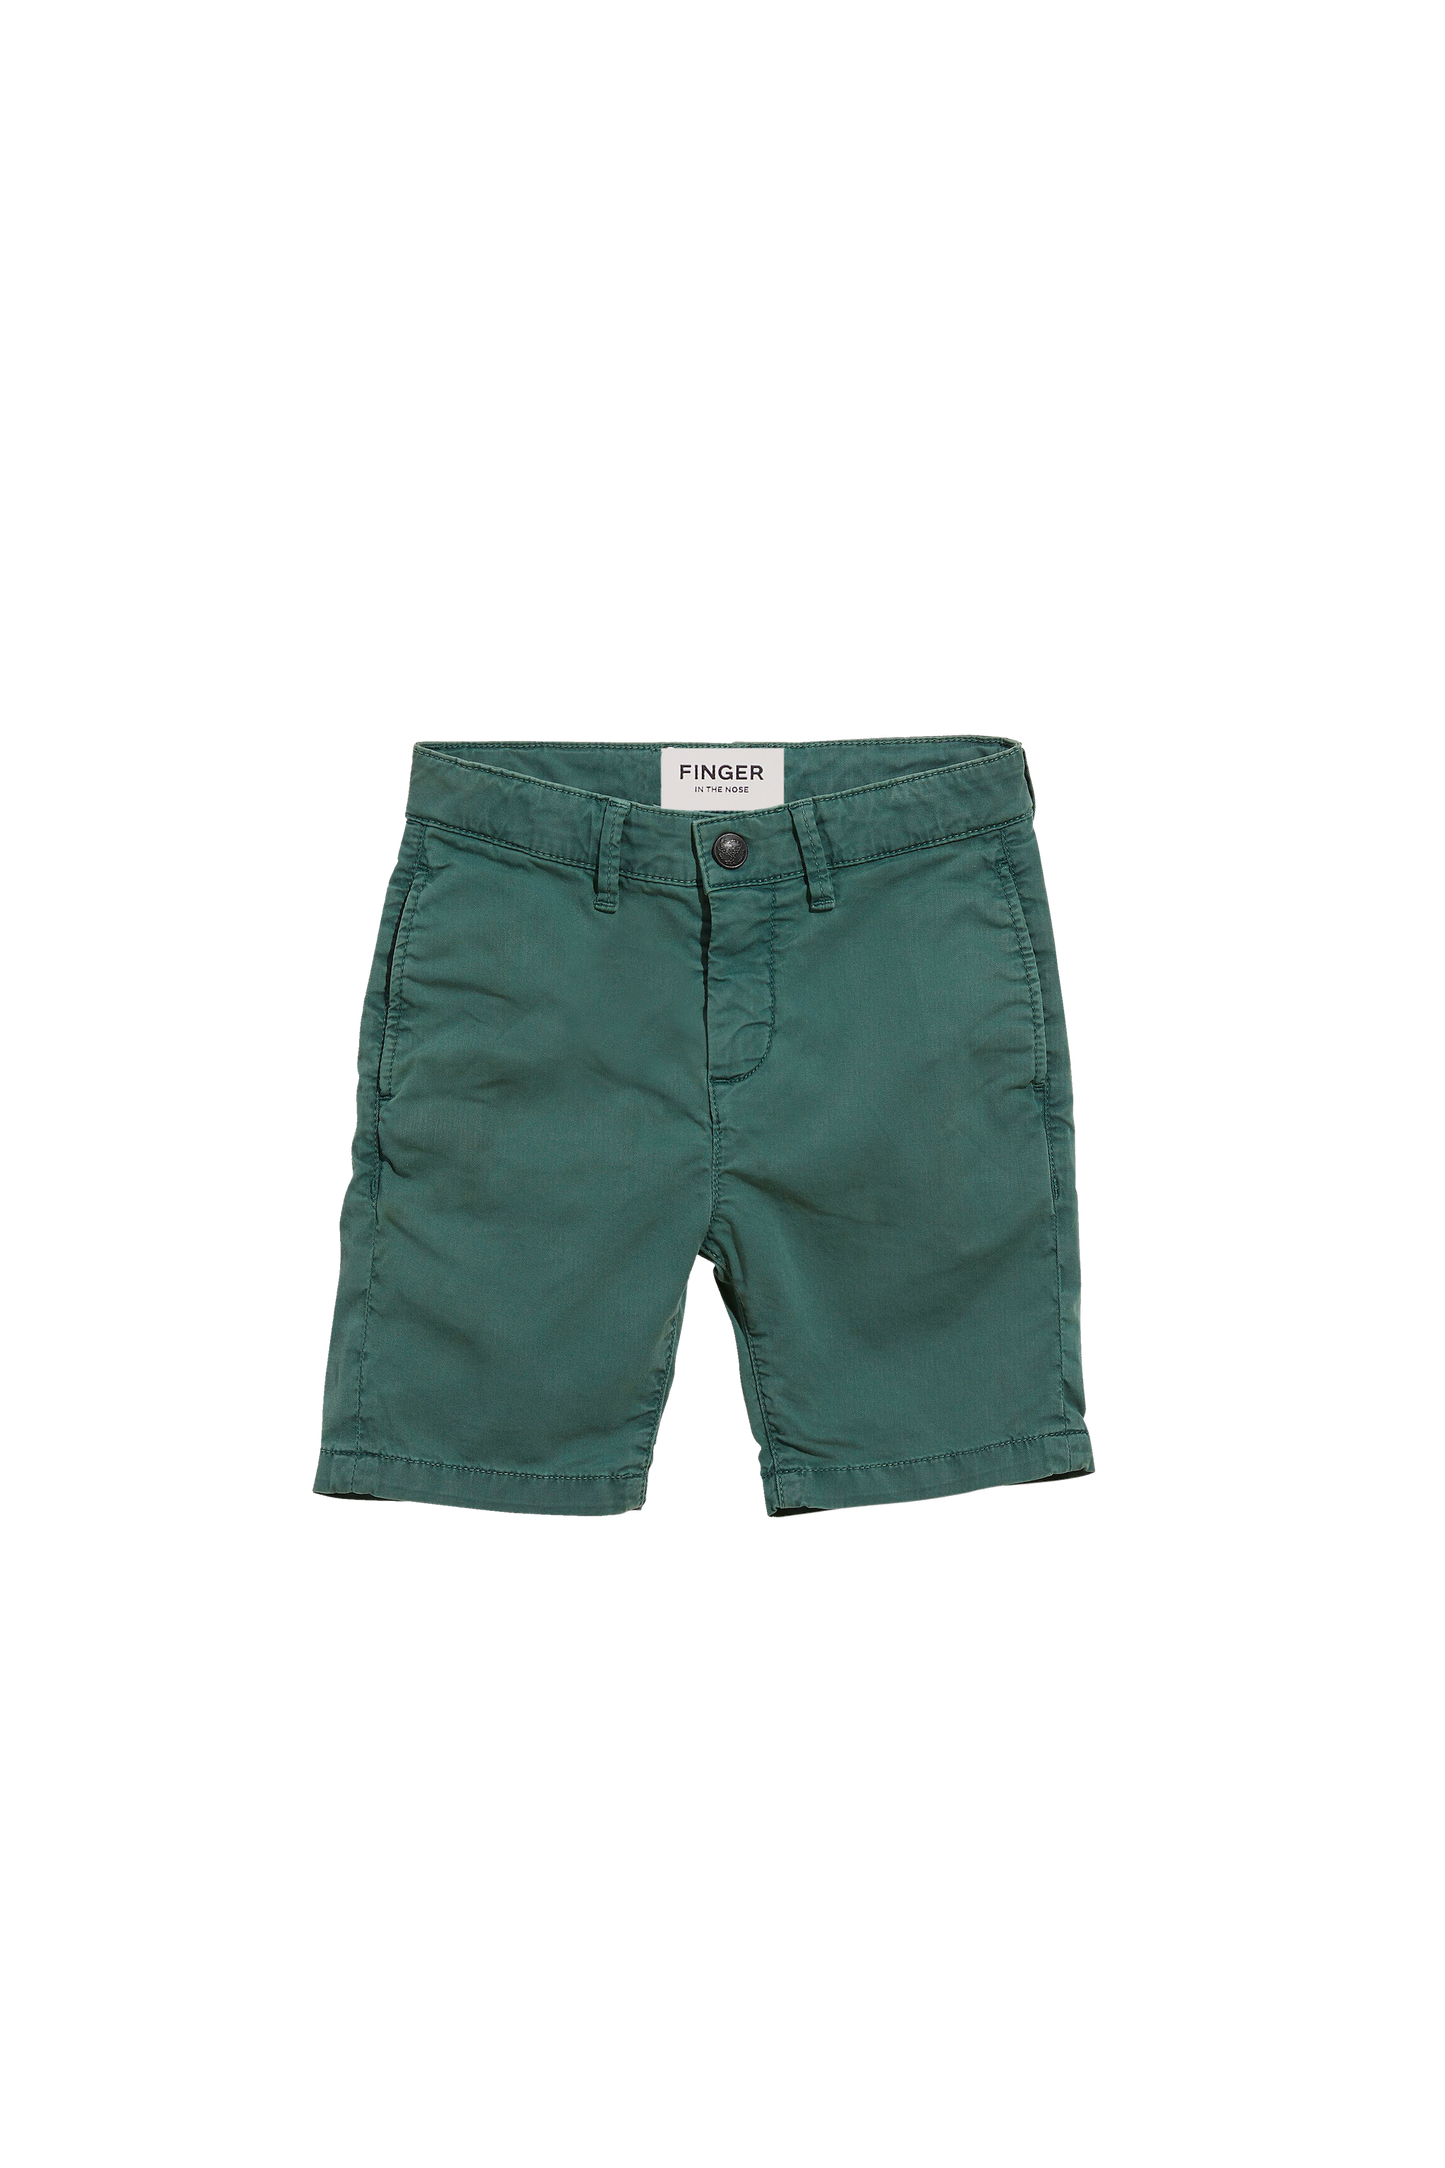 ALLEN Green Khaki - Chino Fit Bermuda Shorts